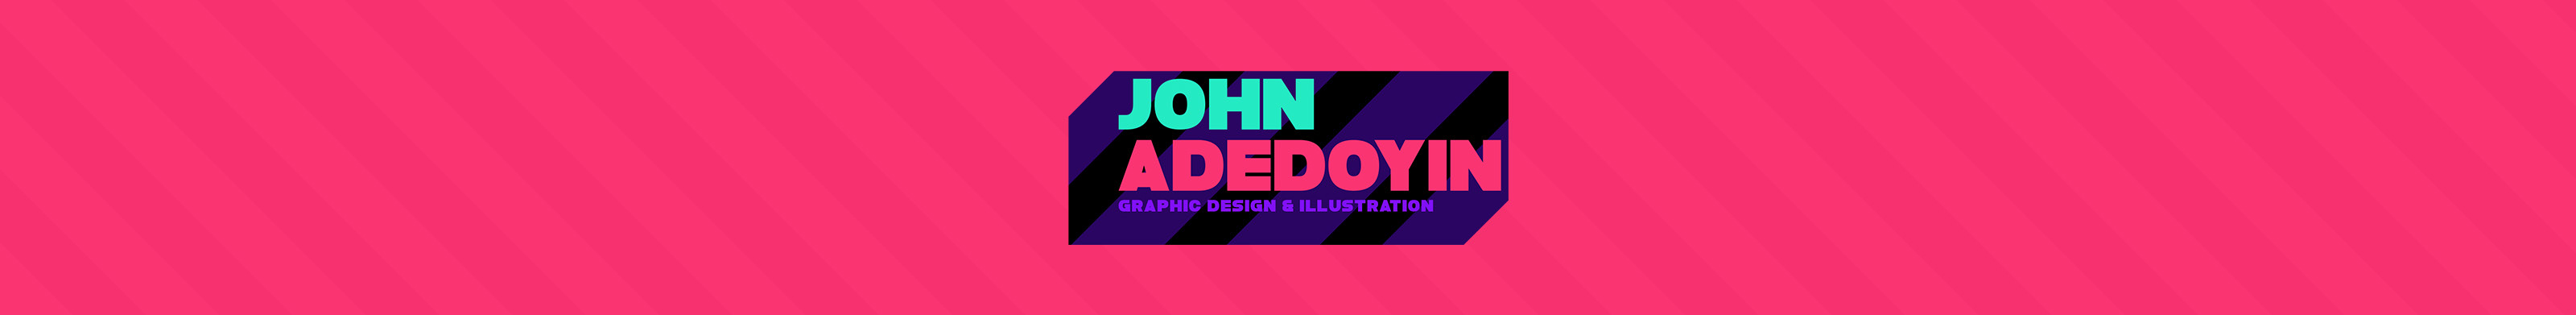 Profil-Banner von John Adedoyin